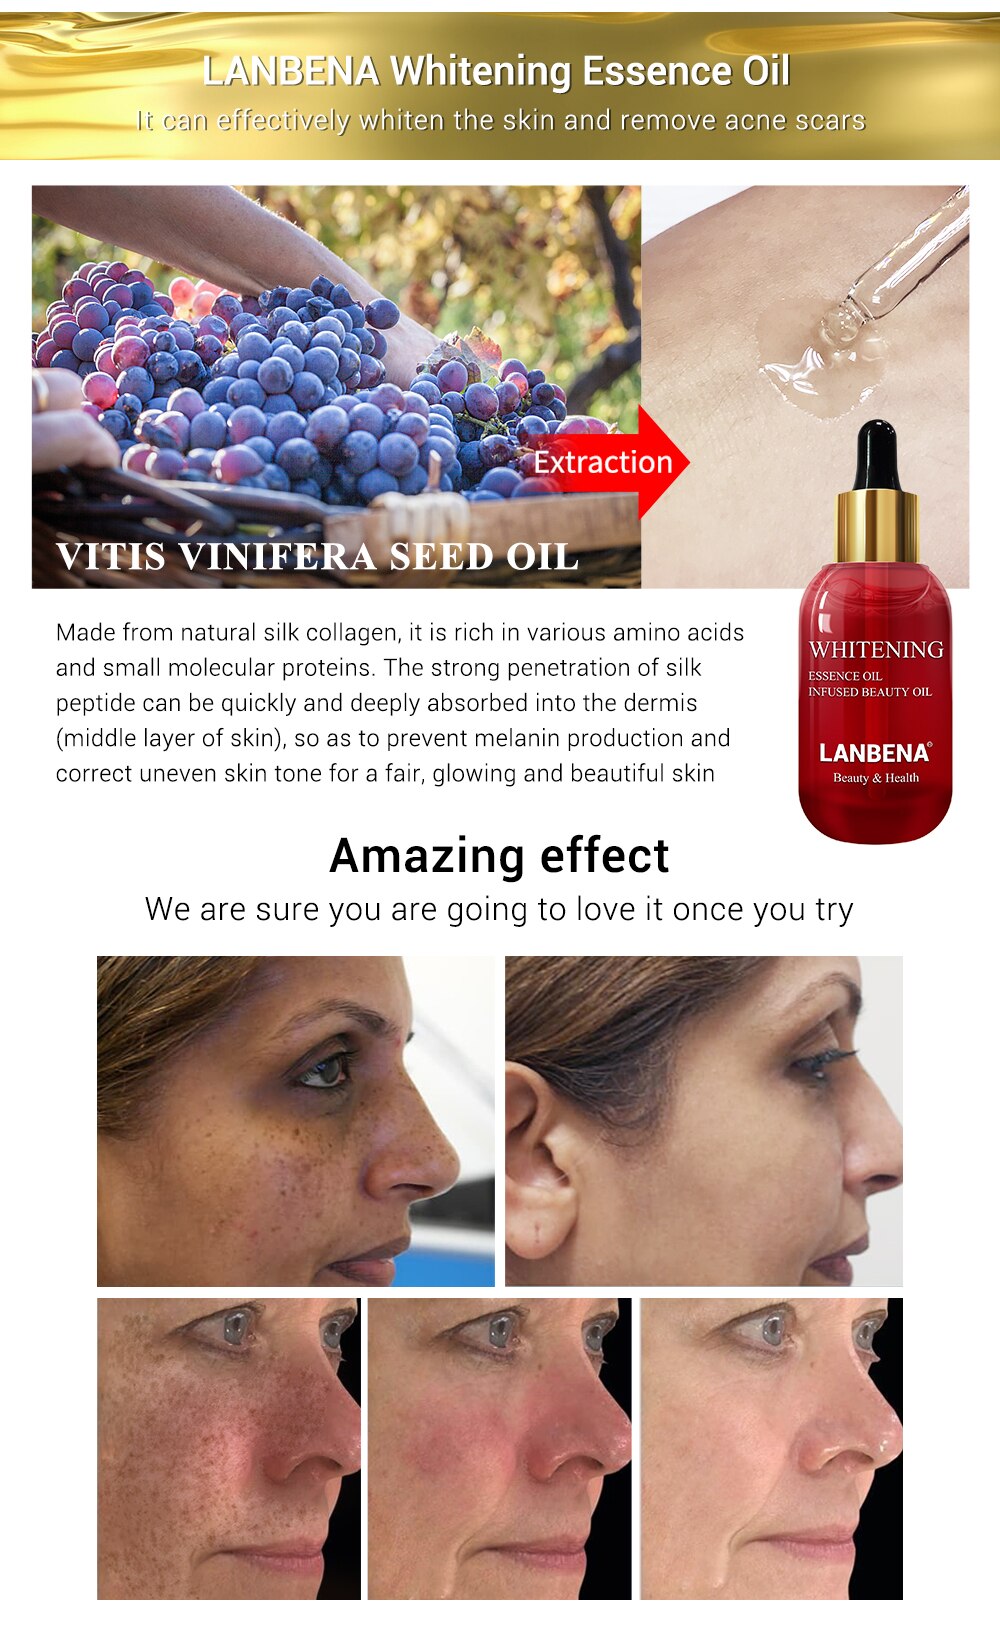 LANBENA Skin Care Face Serum Vitamina C Whitening Serum Facial Essential Oil 24k Gold Serum Essences Hyaluronic Acid Face Care